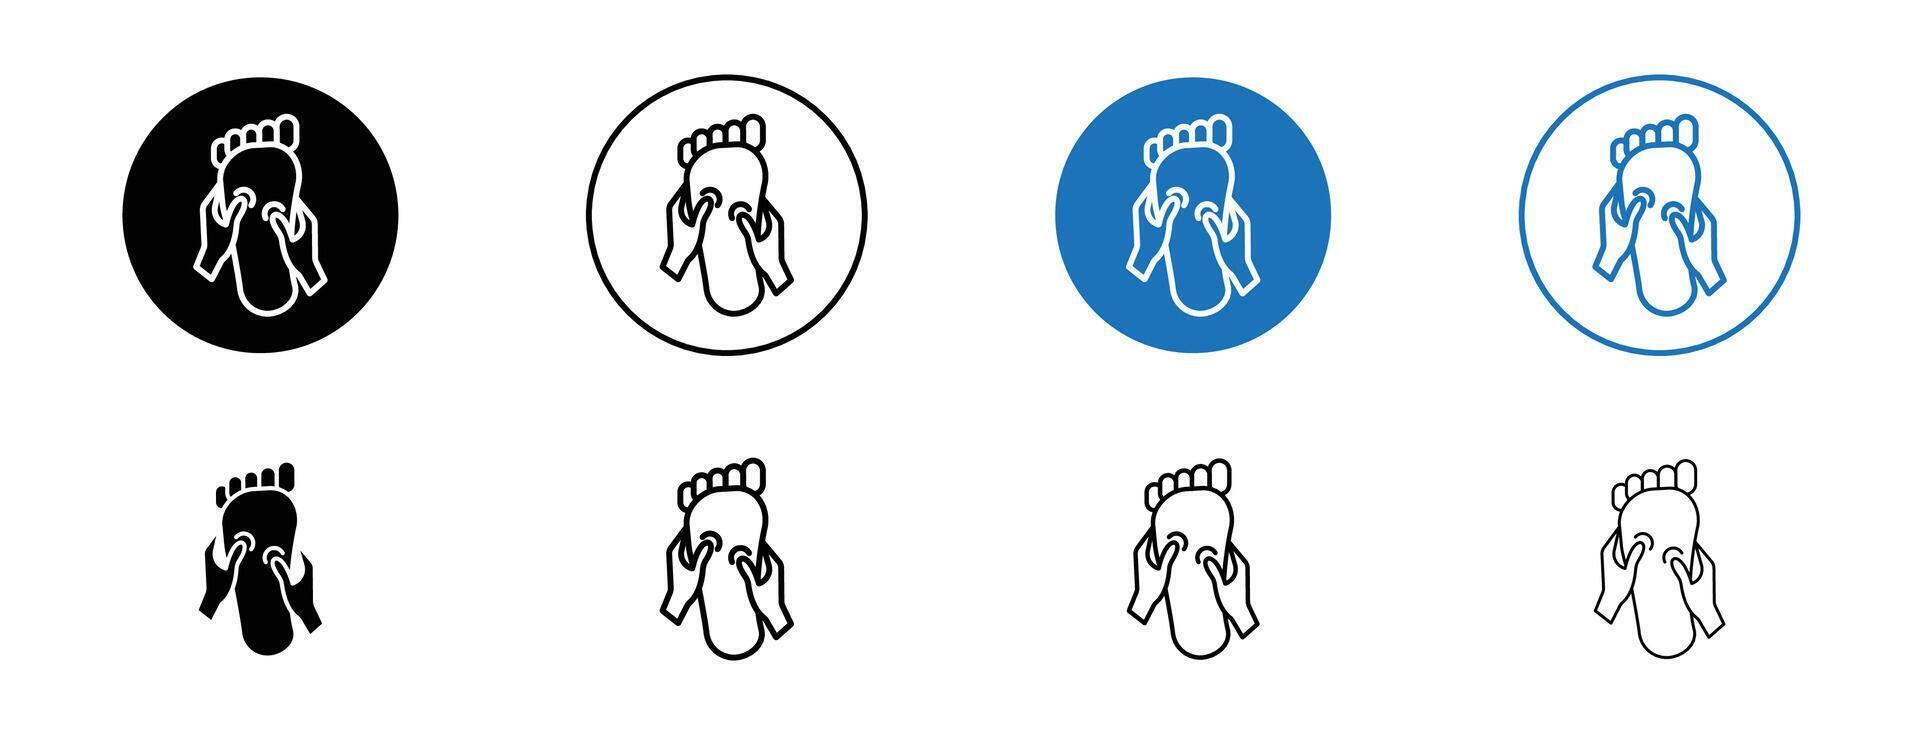 Reflexology foot massage icon vector